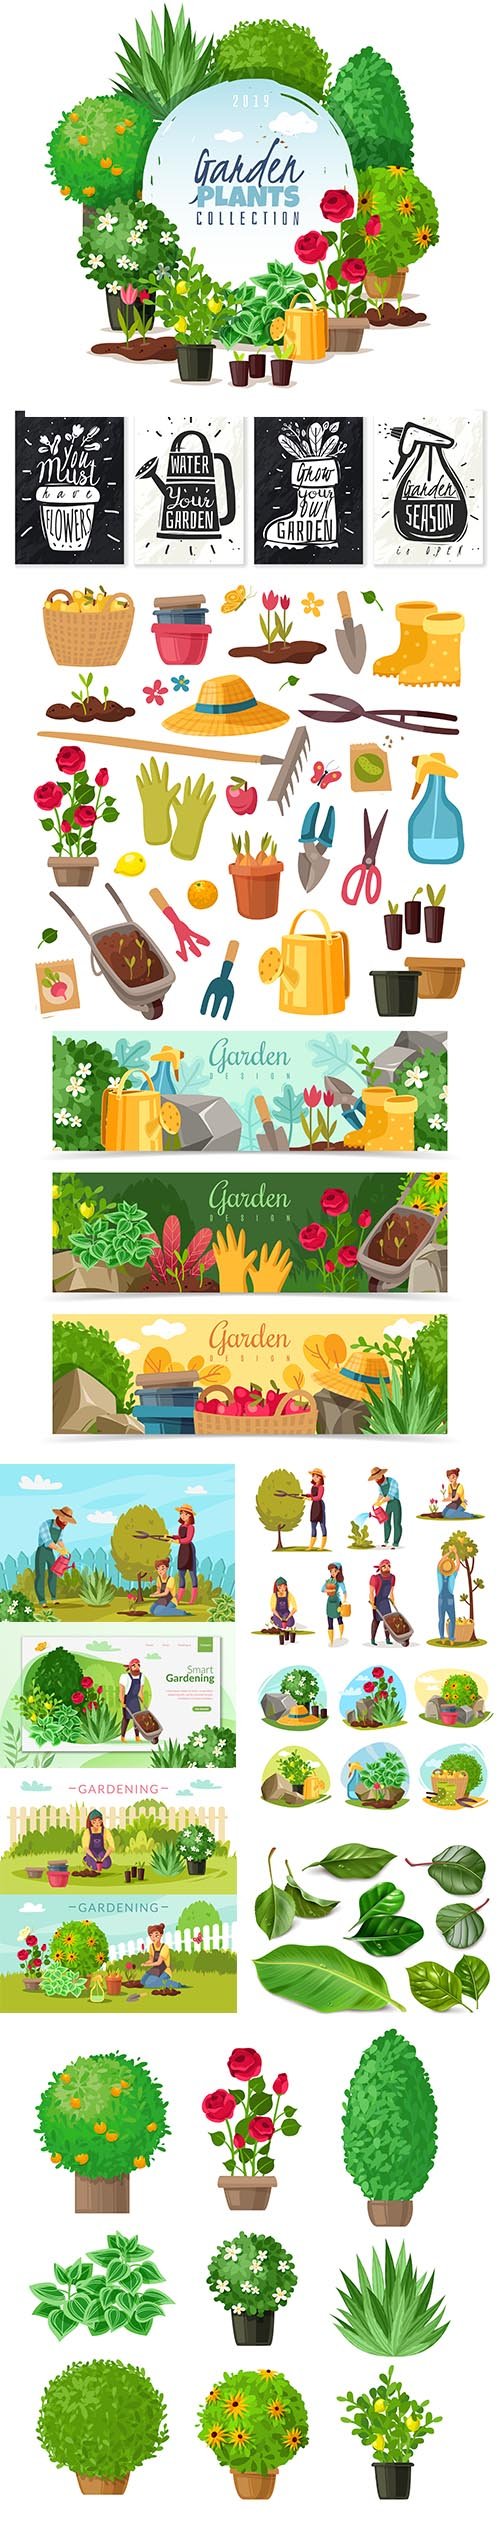 Gardening Illustration Cartoon Plants Collections